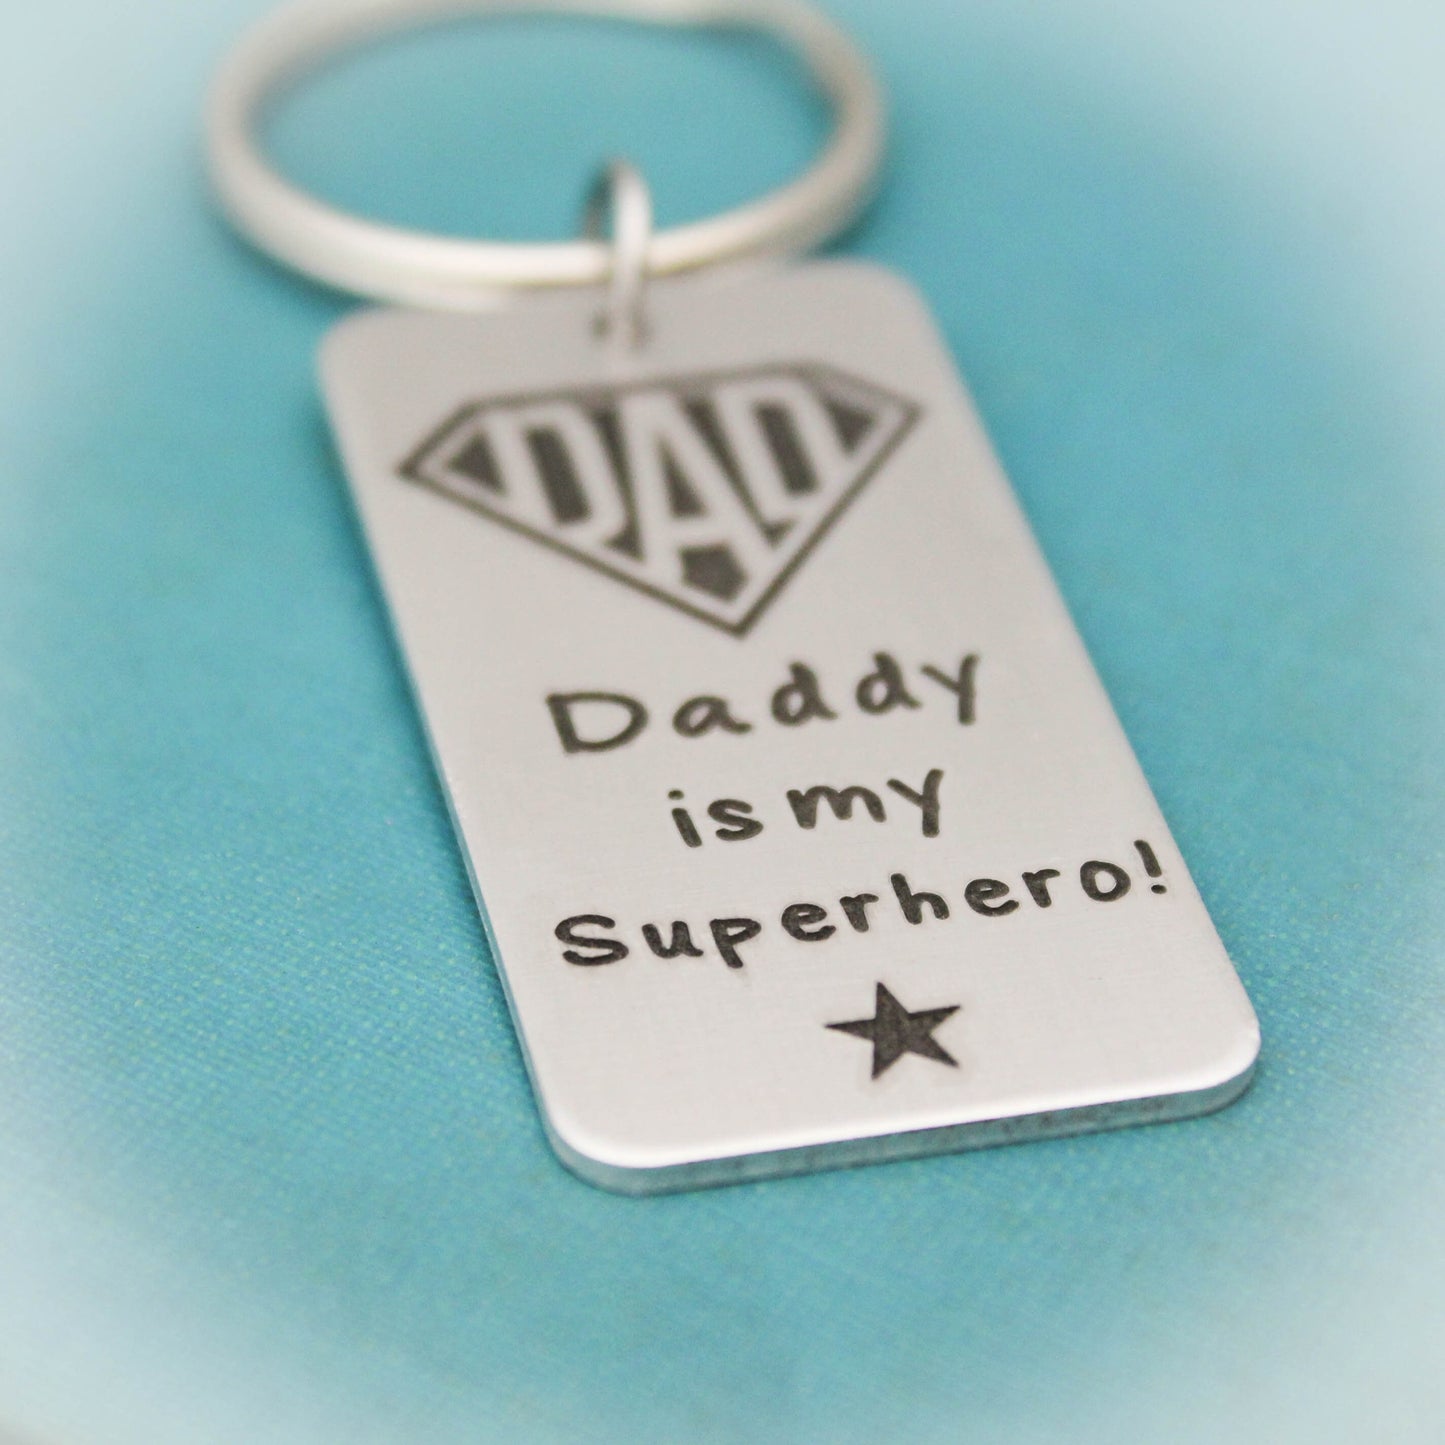 Daddy is my Superhero Keychain, Custom Key Chain, Hero Keychain, Gift for Him, Dad is my Super Hero, Personalized Gift, Father's Day Gift